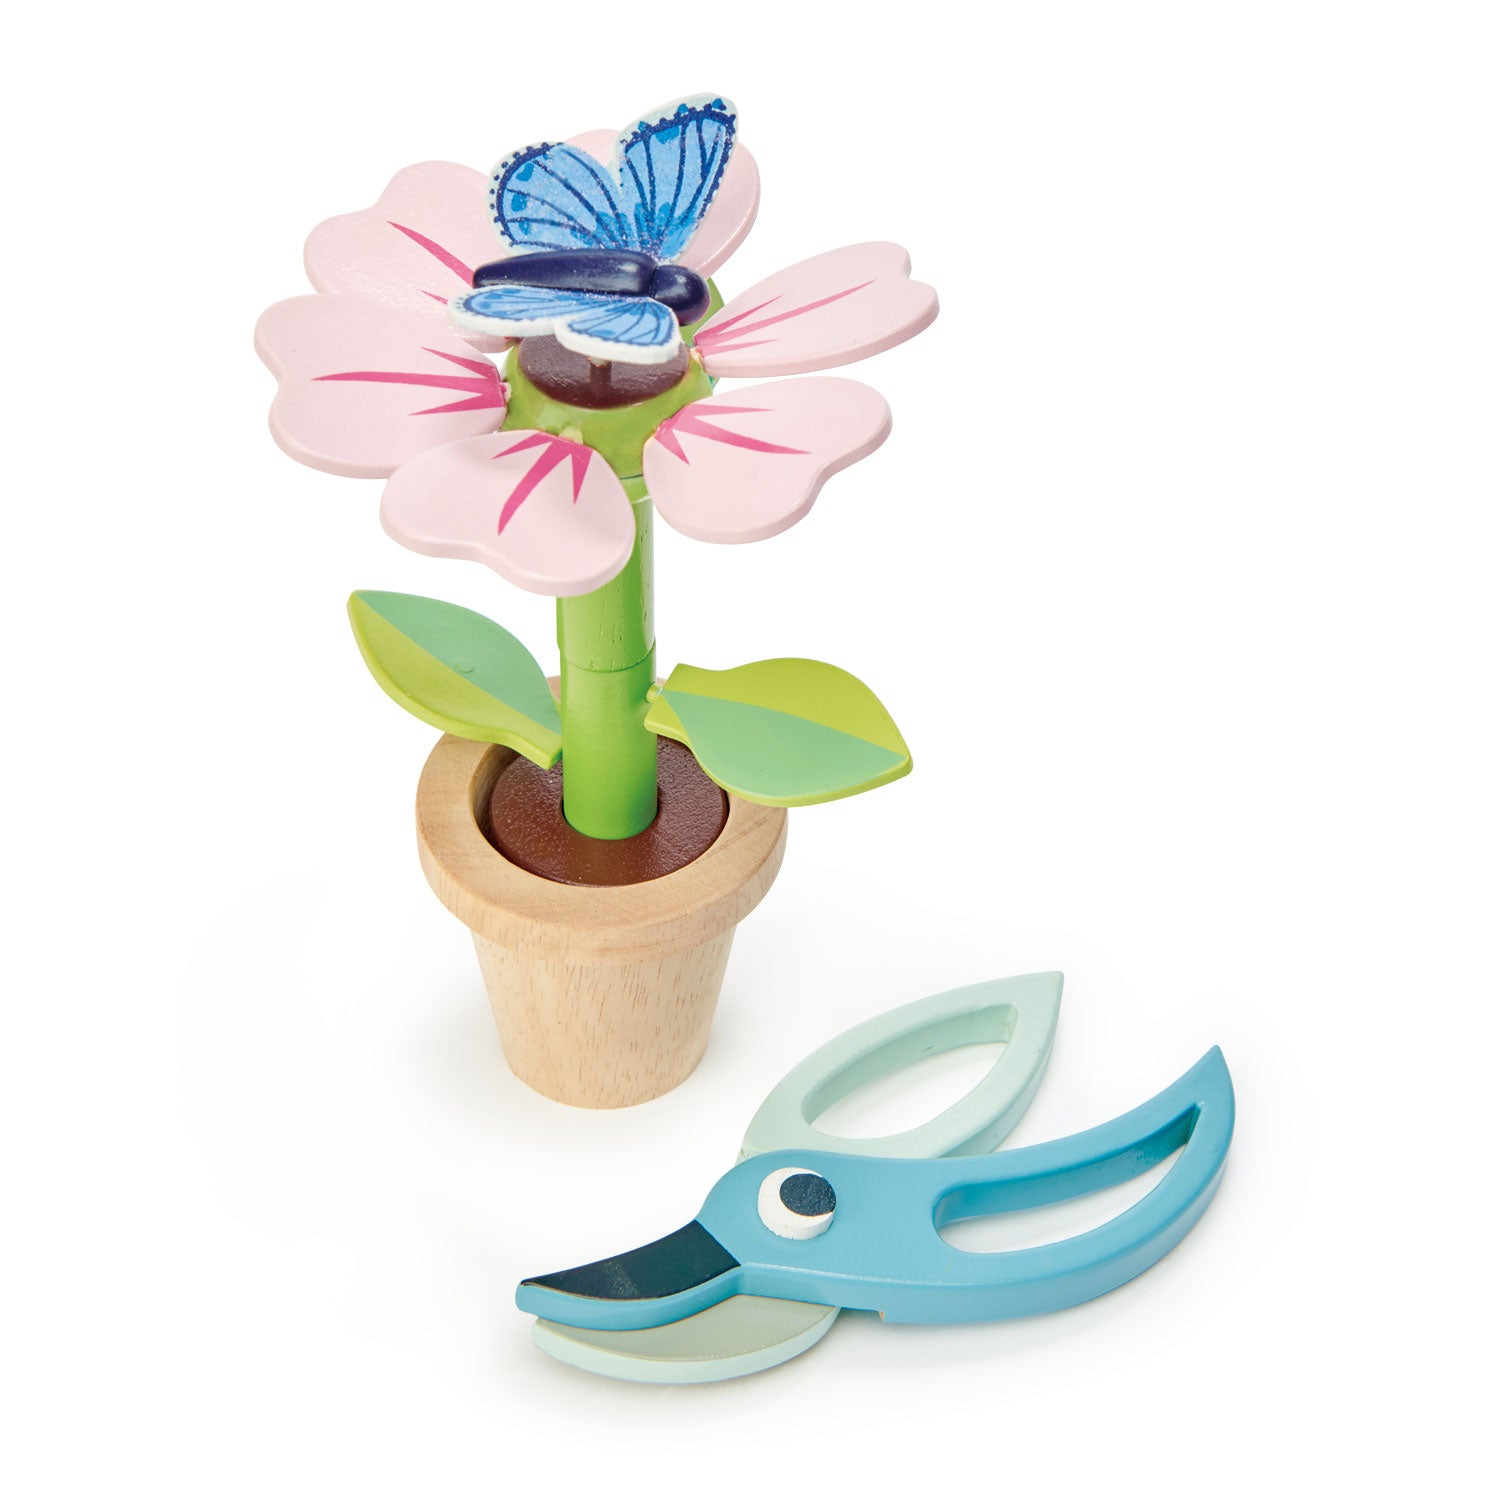 Blomma, Tender leaf toys